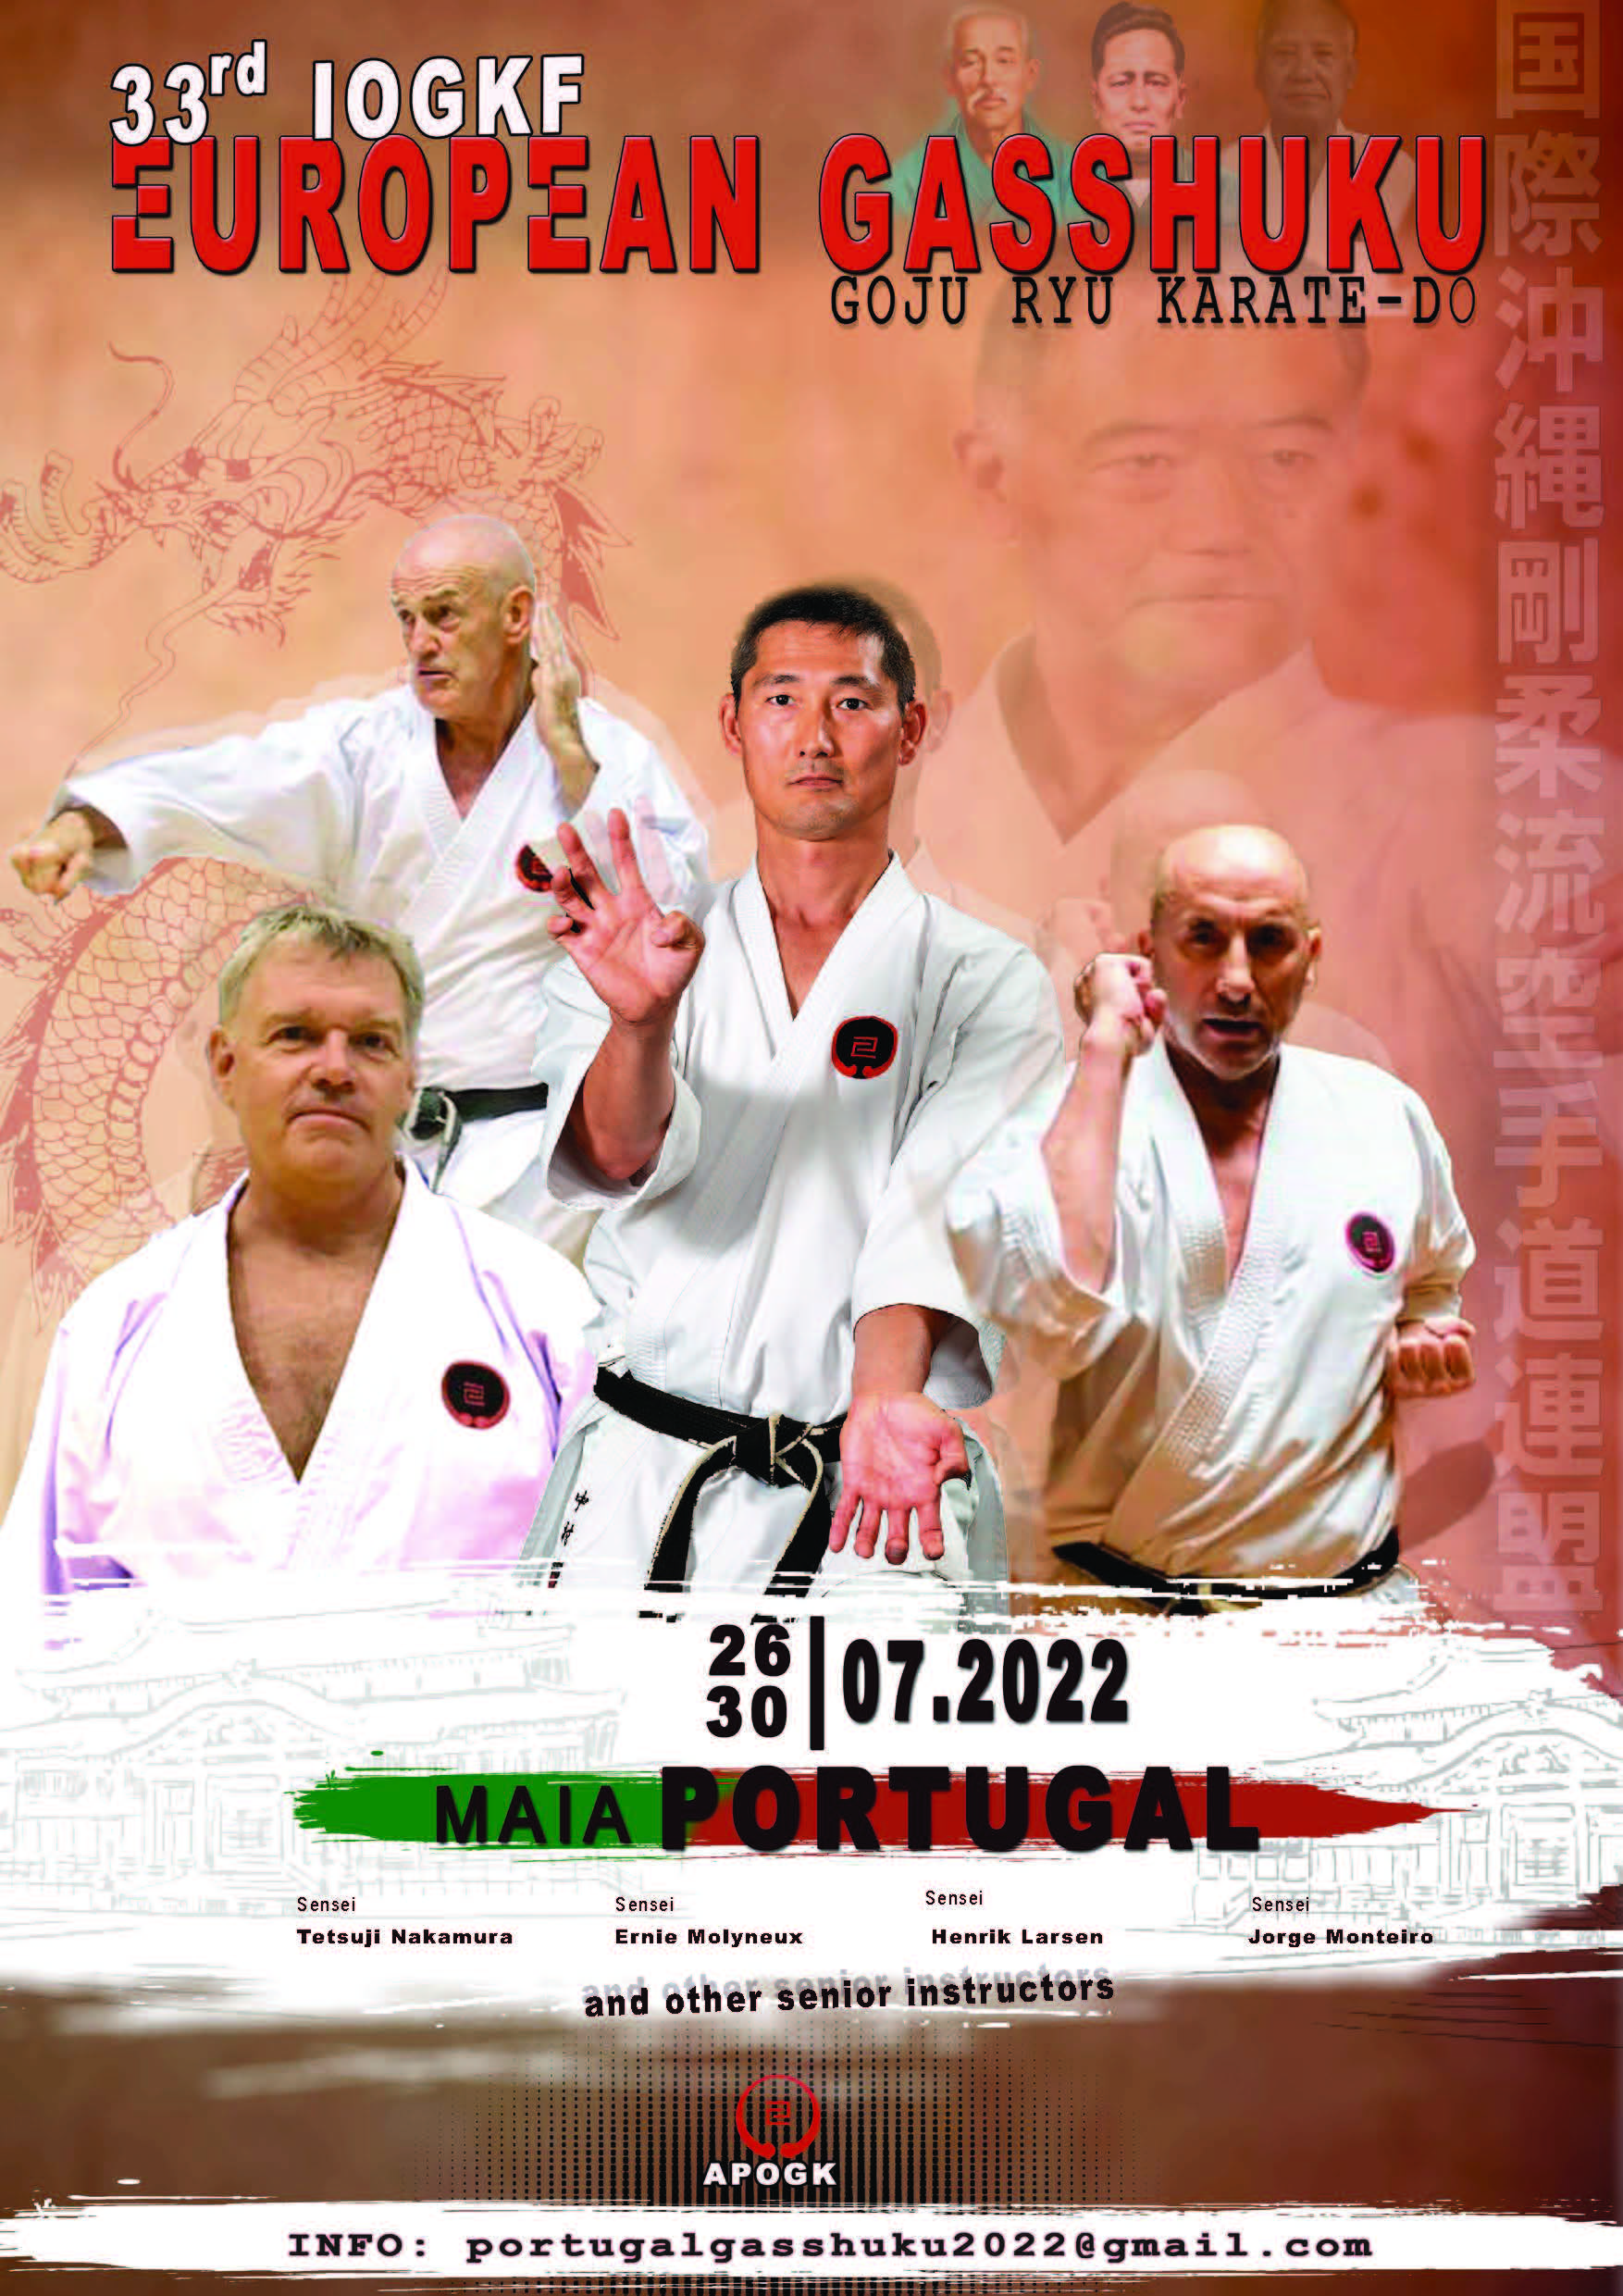 Maia, Portugal - 33rd European Gasshuku - July 2022